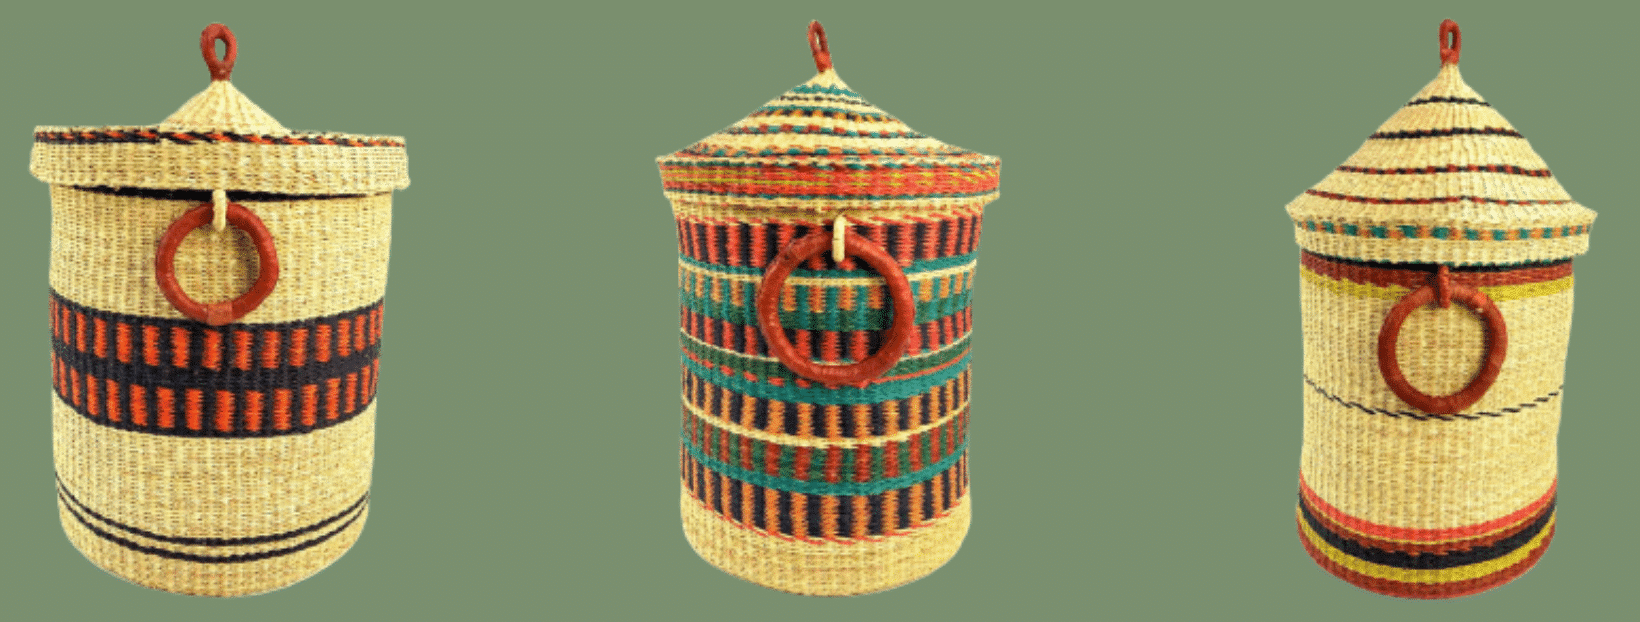 Brand new laundry bolga baskets, handmade in Ghana from elephant grass.